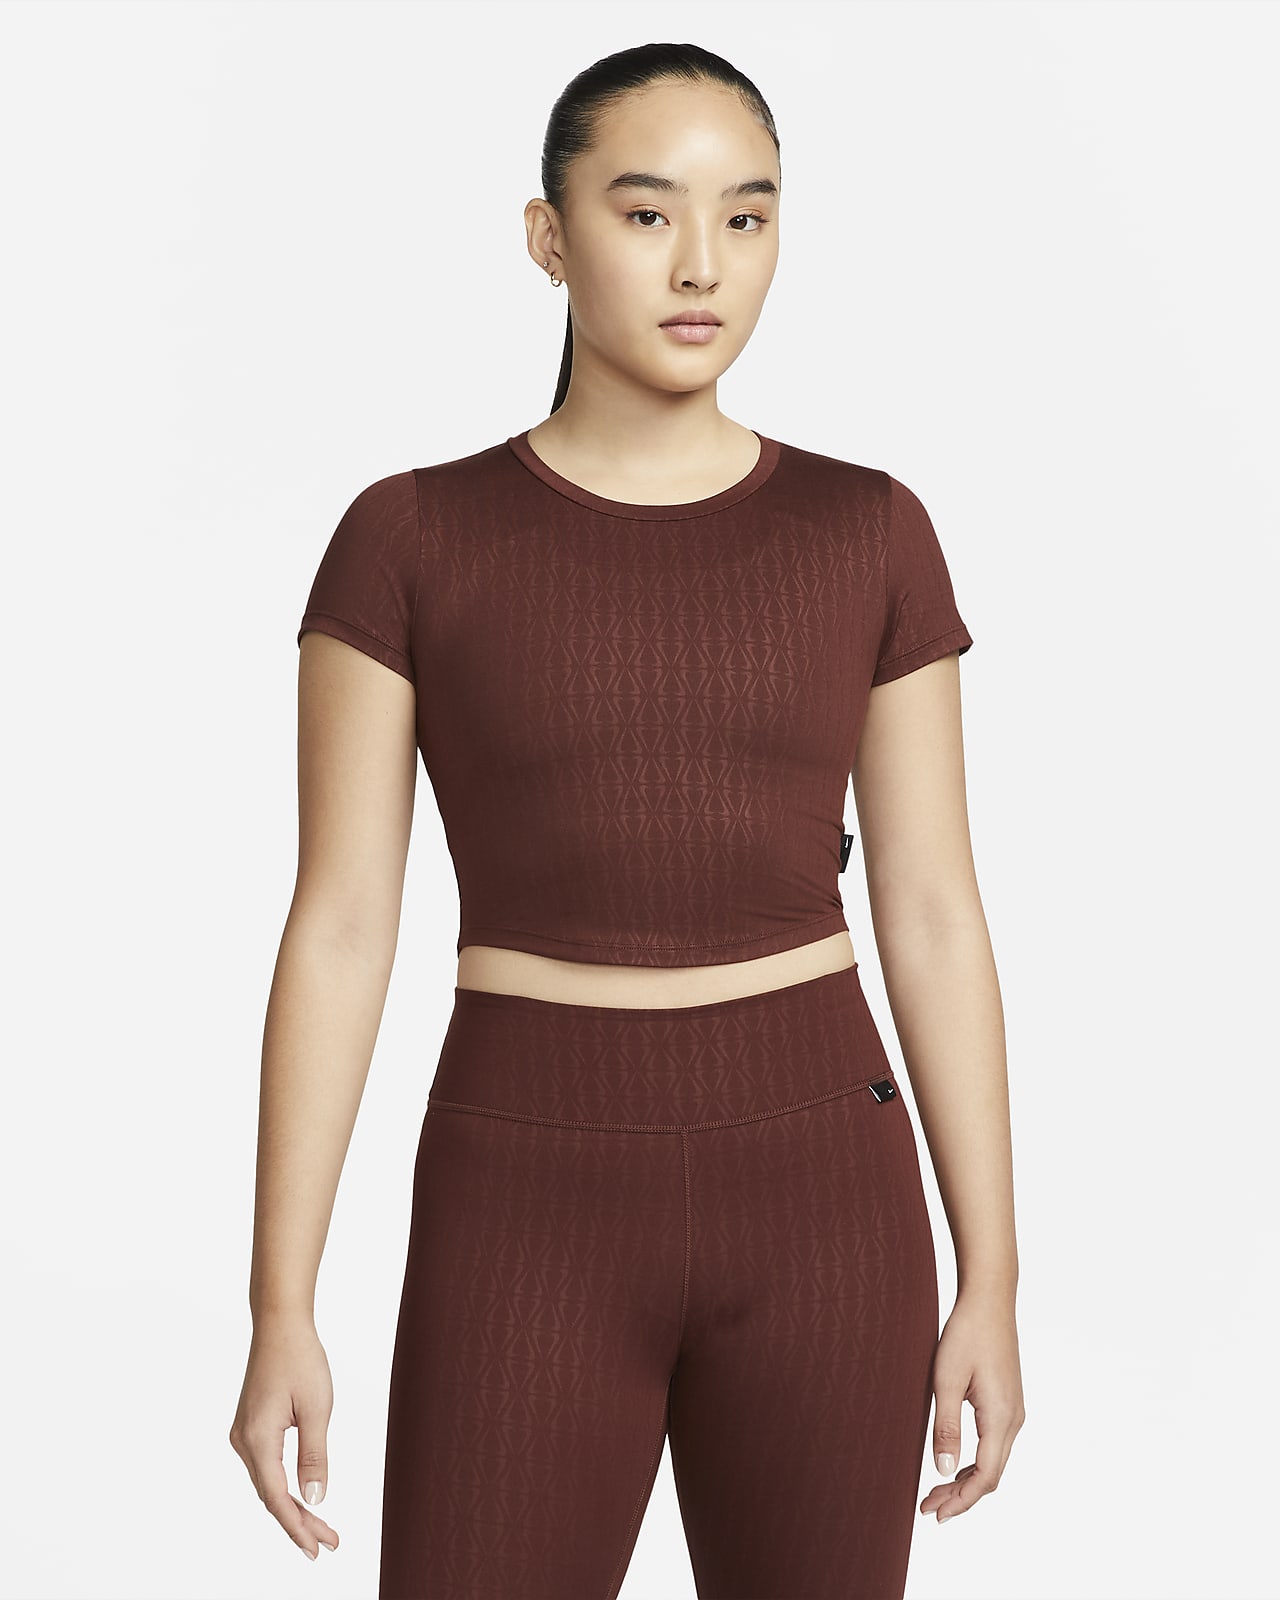 Nike Dri-FIT One Luxe Women's Slim Fit Printed Top